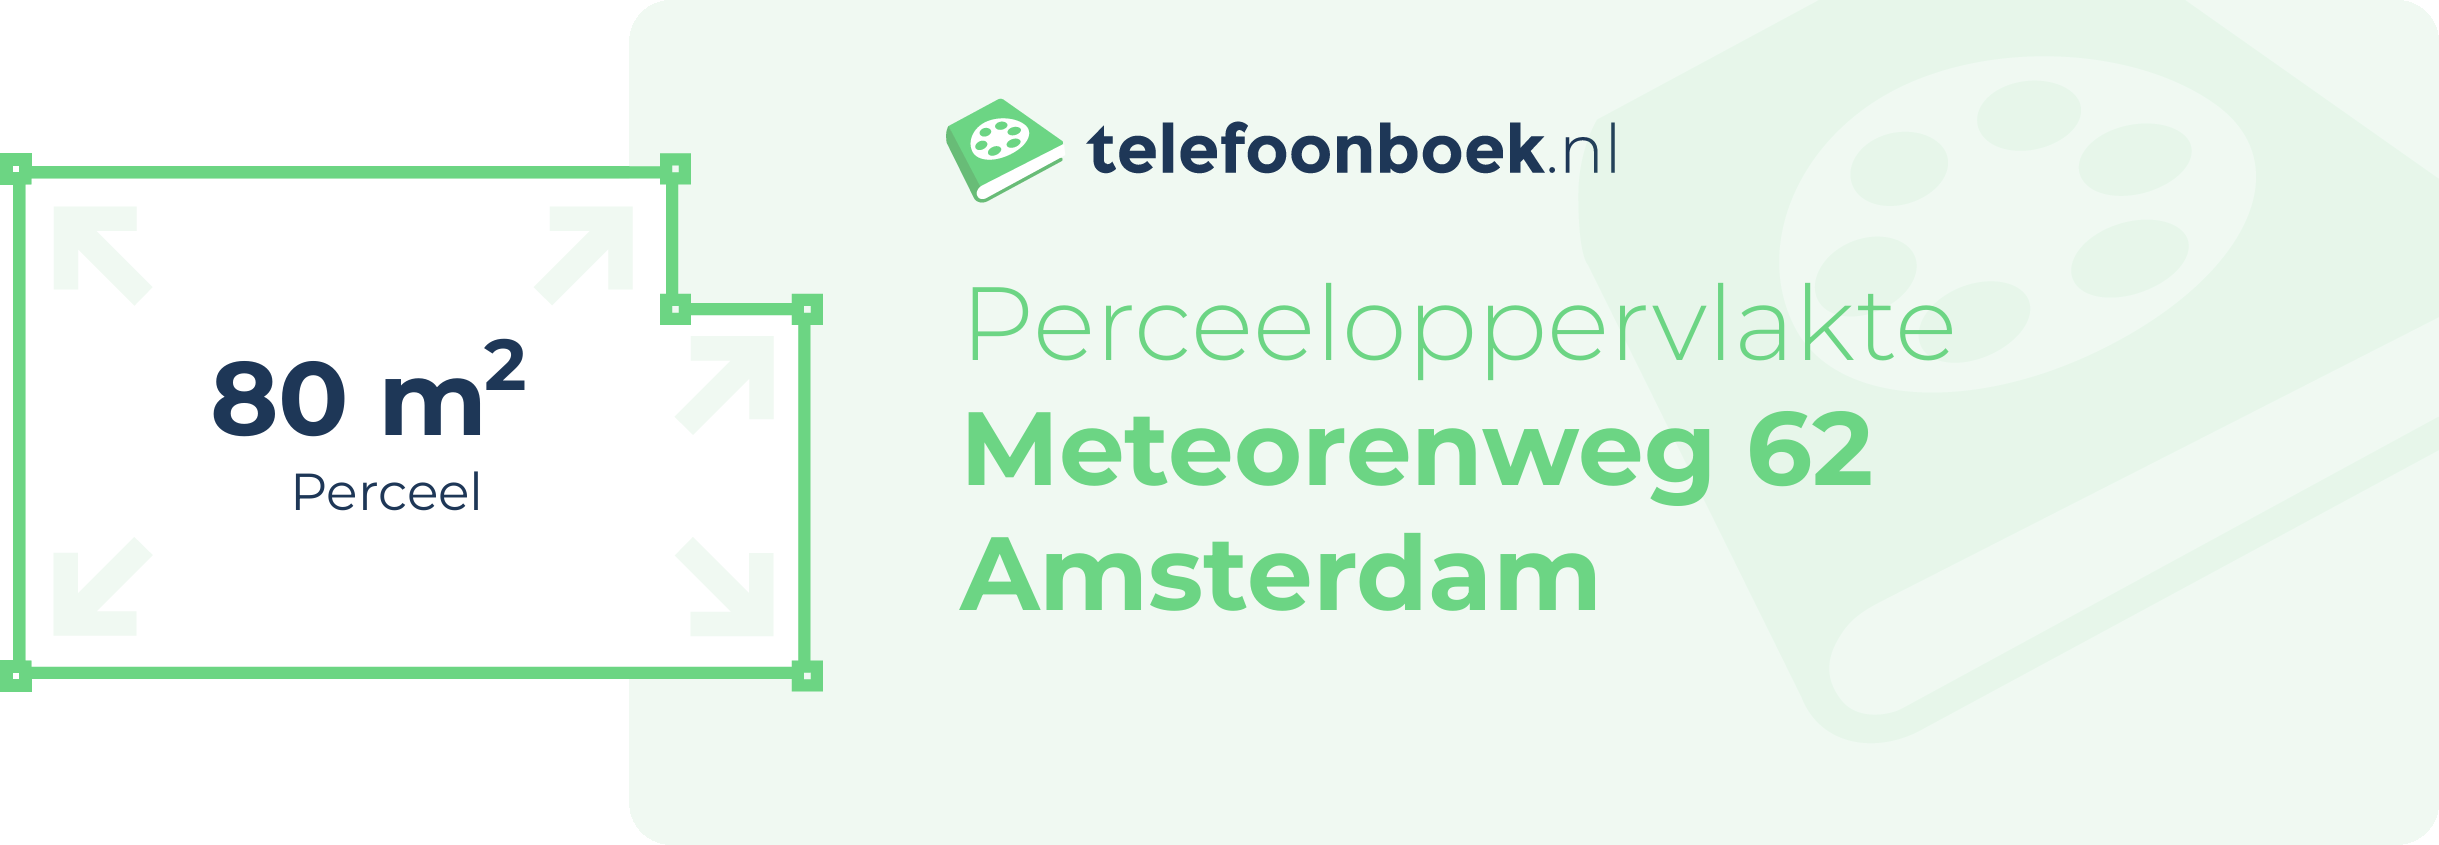 Perceeloppervlakte Meteorenweg 62 Amsterdam